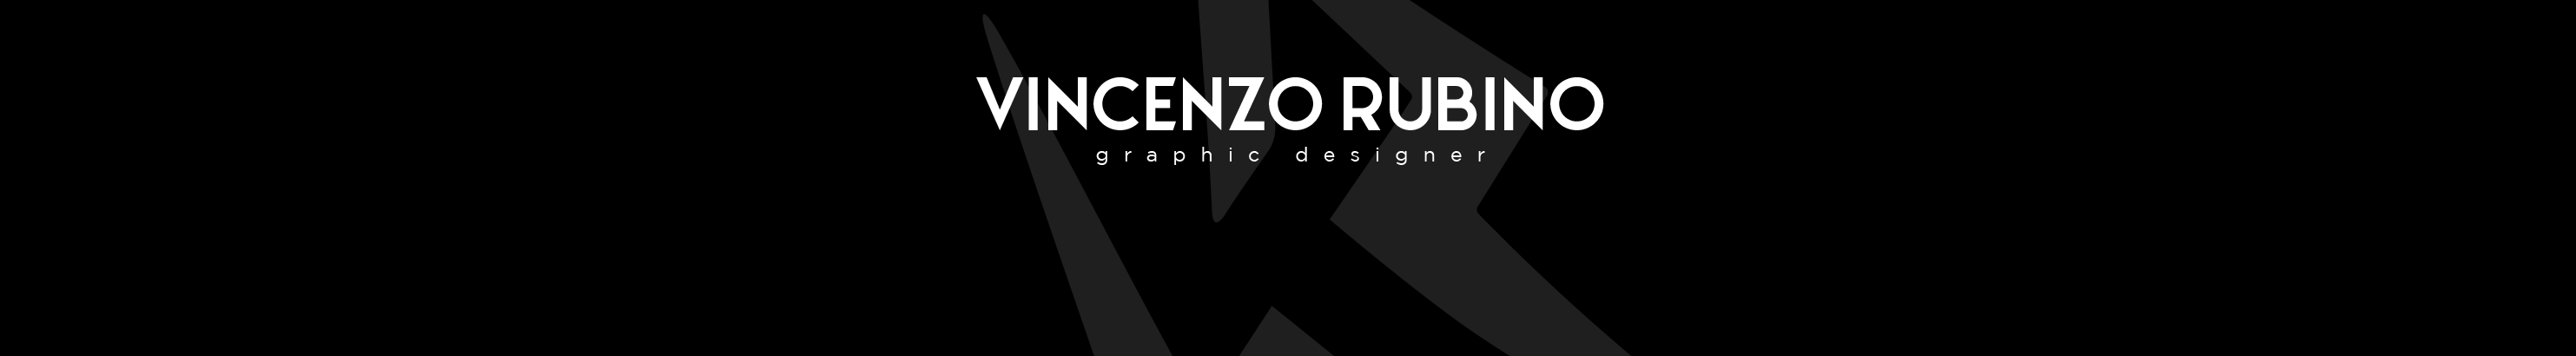 Profil-Banner von Vincenzo Rubino